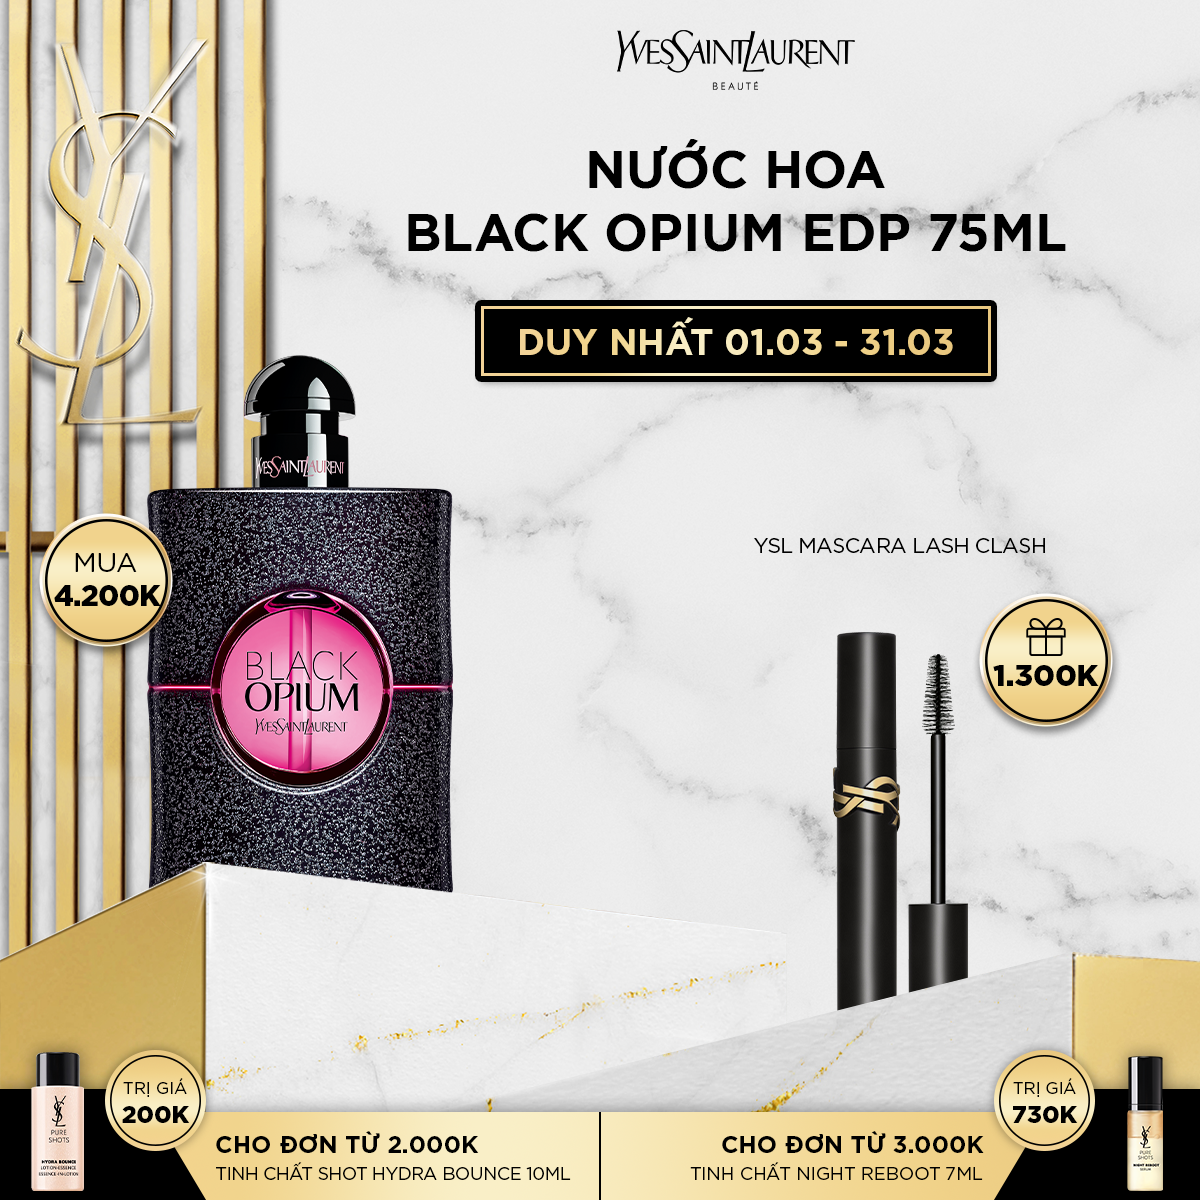 [MAR] Nước hoa Black Opium EDP 75ml